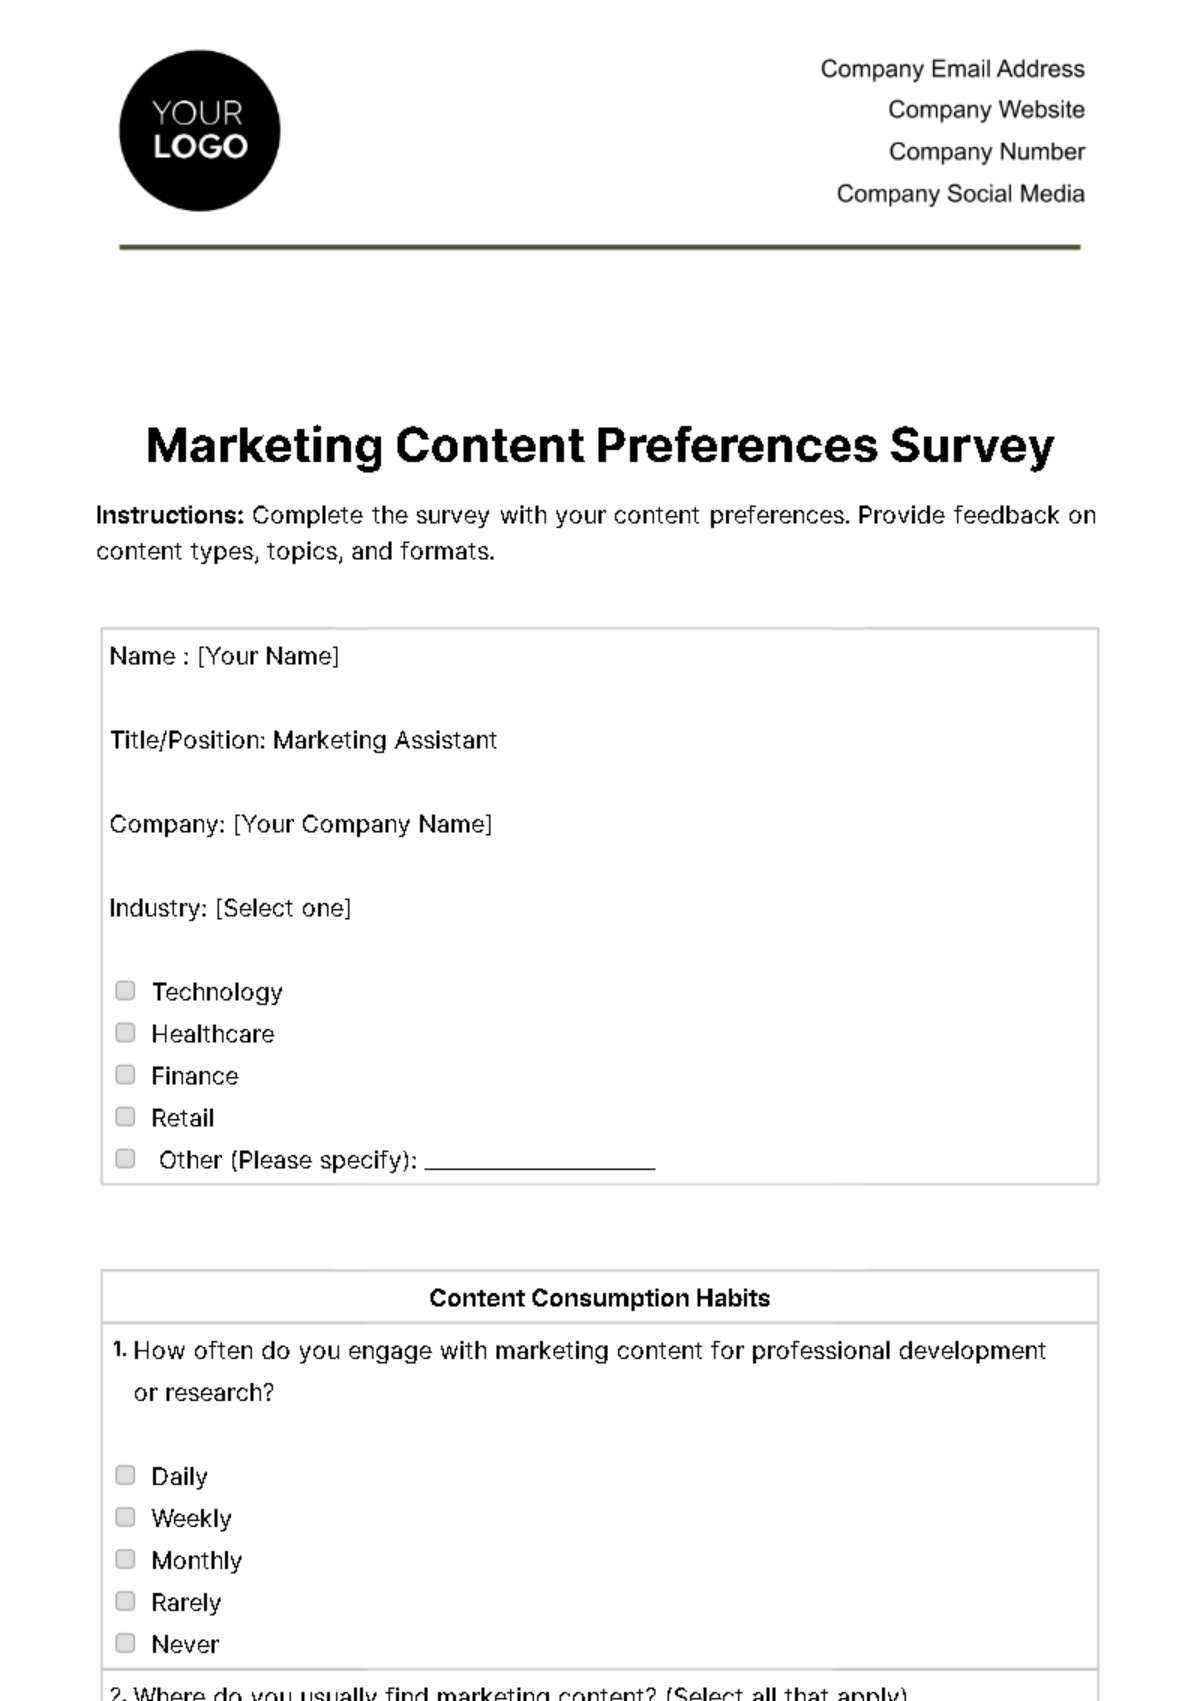 Marketing Content Preferences Survey Template